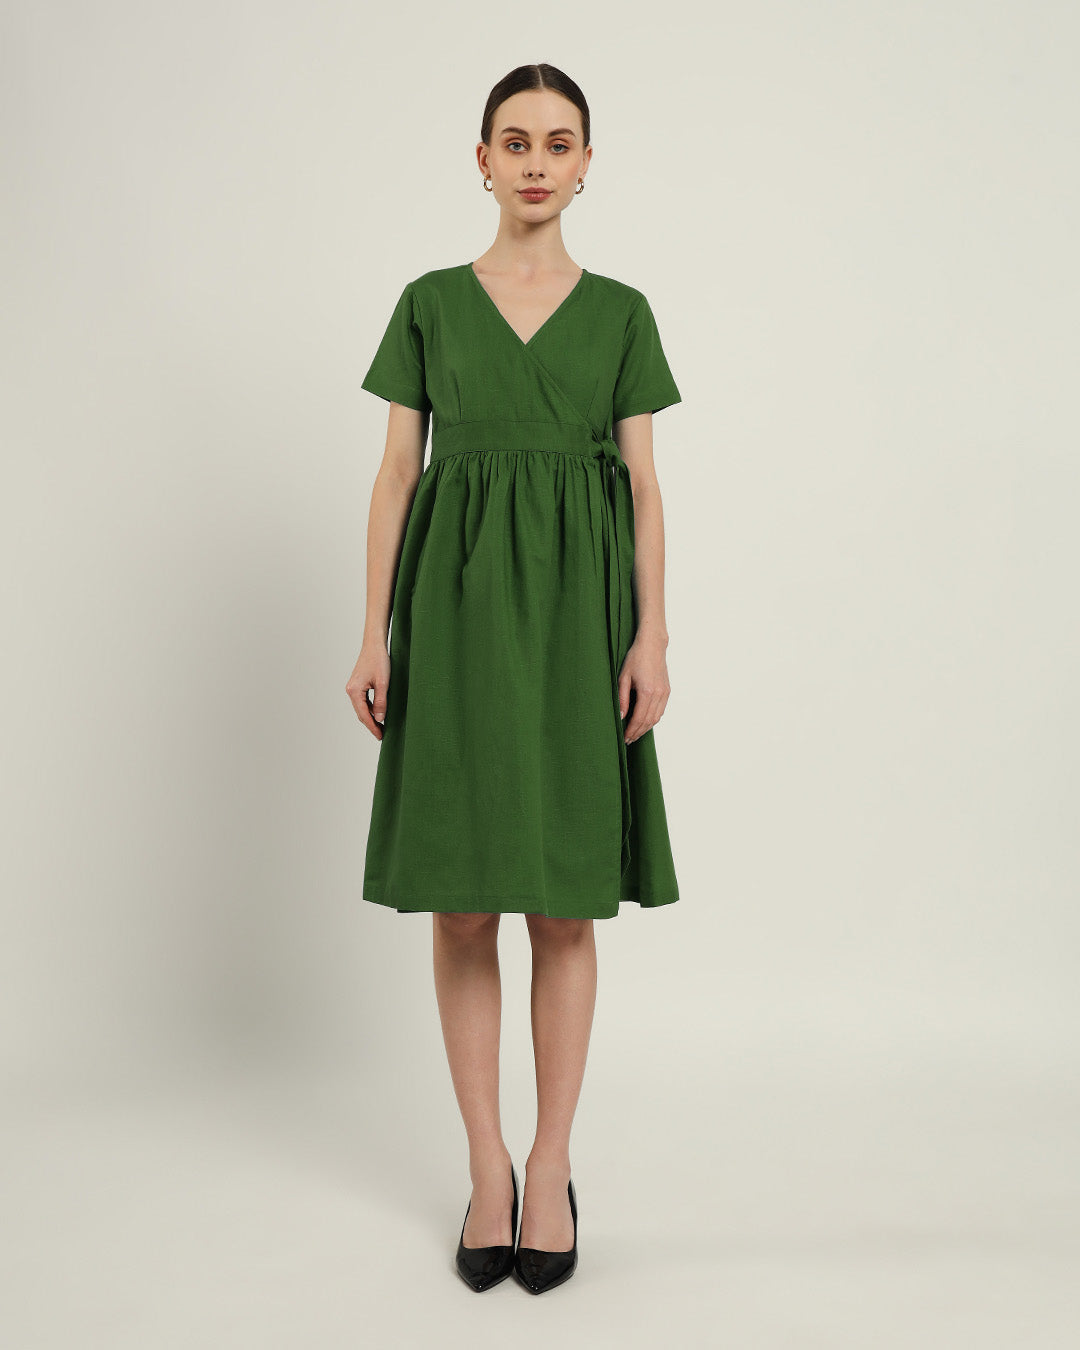 The Miyoshi Emerald Cotton Dress